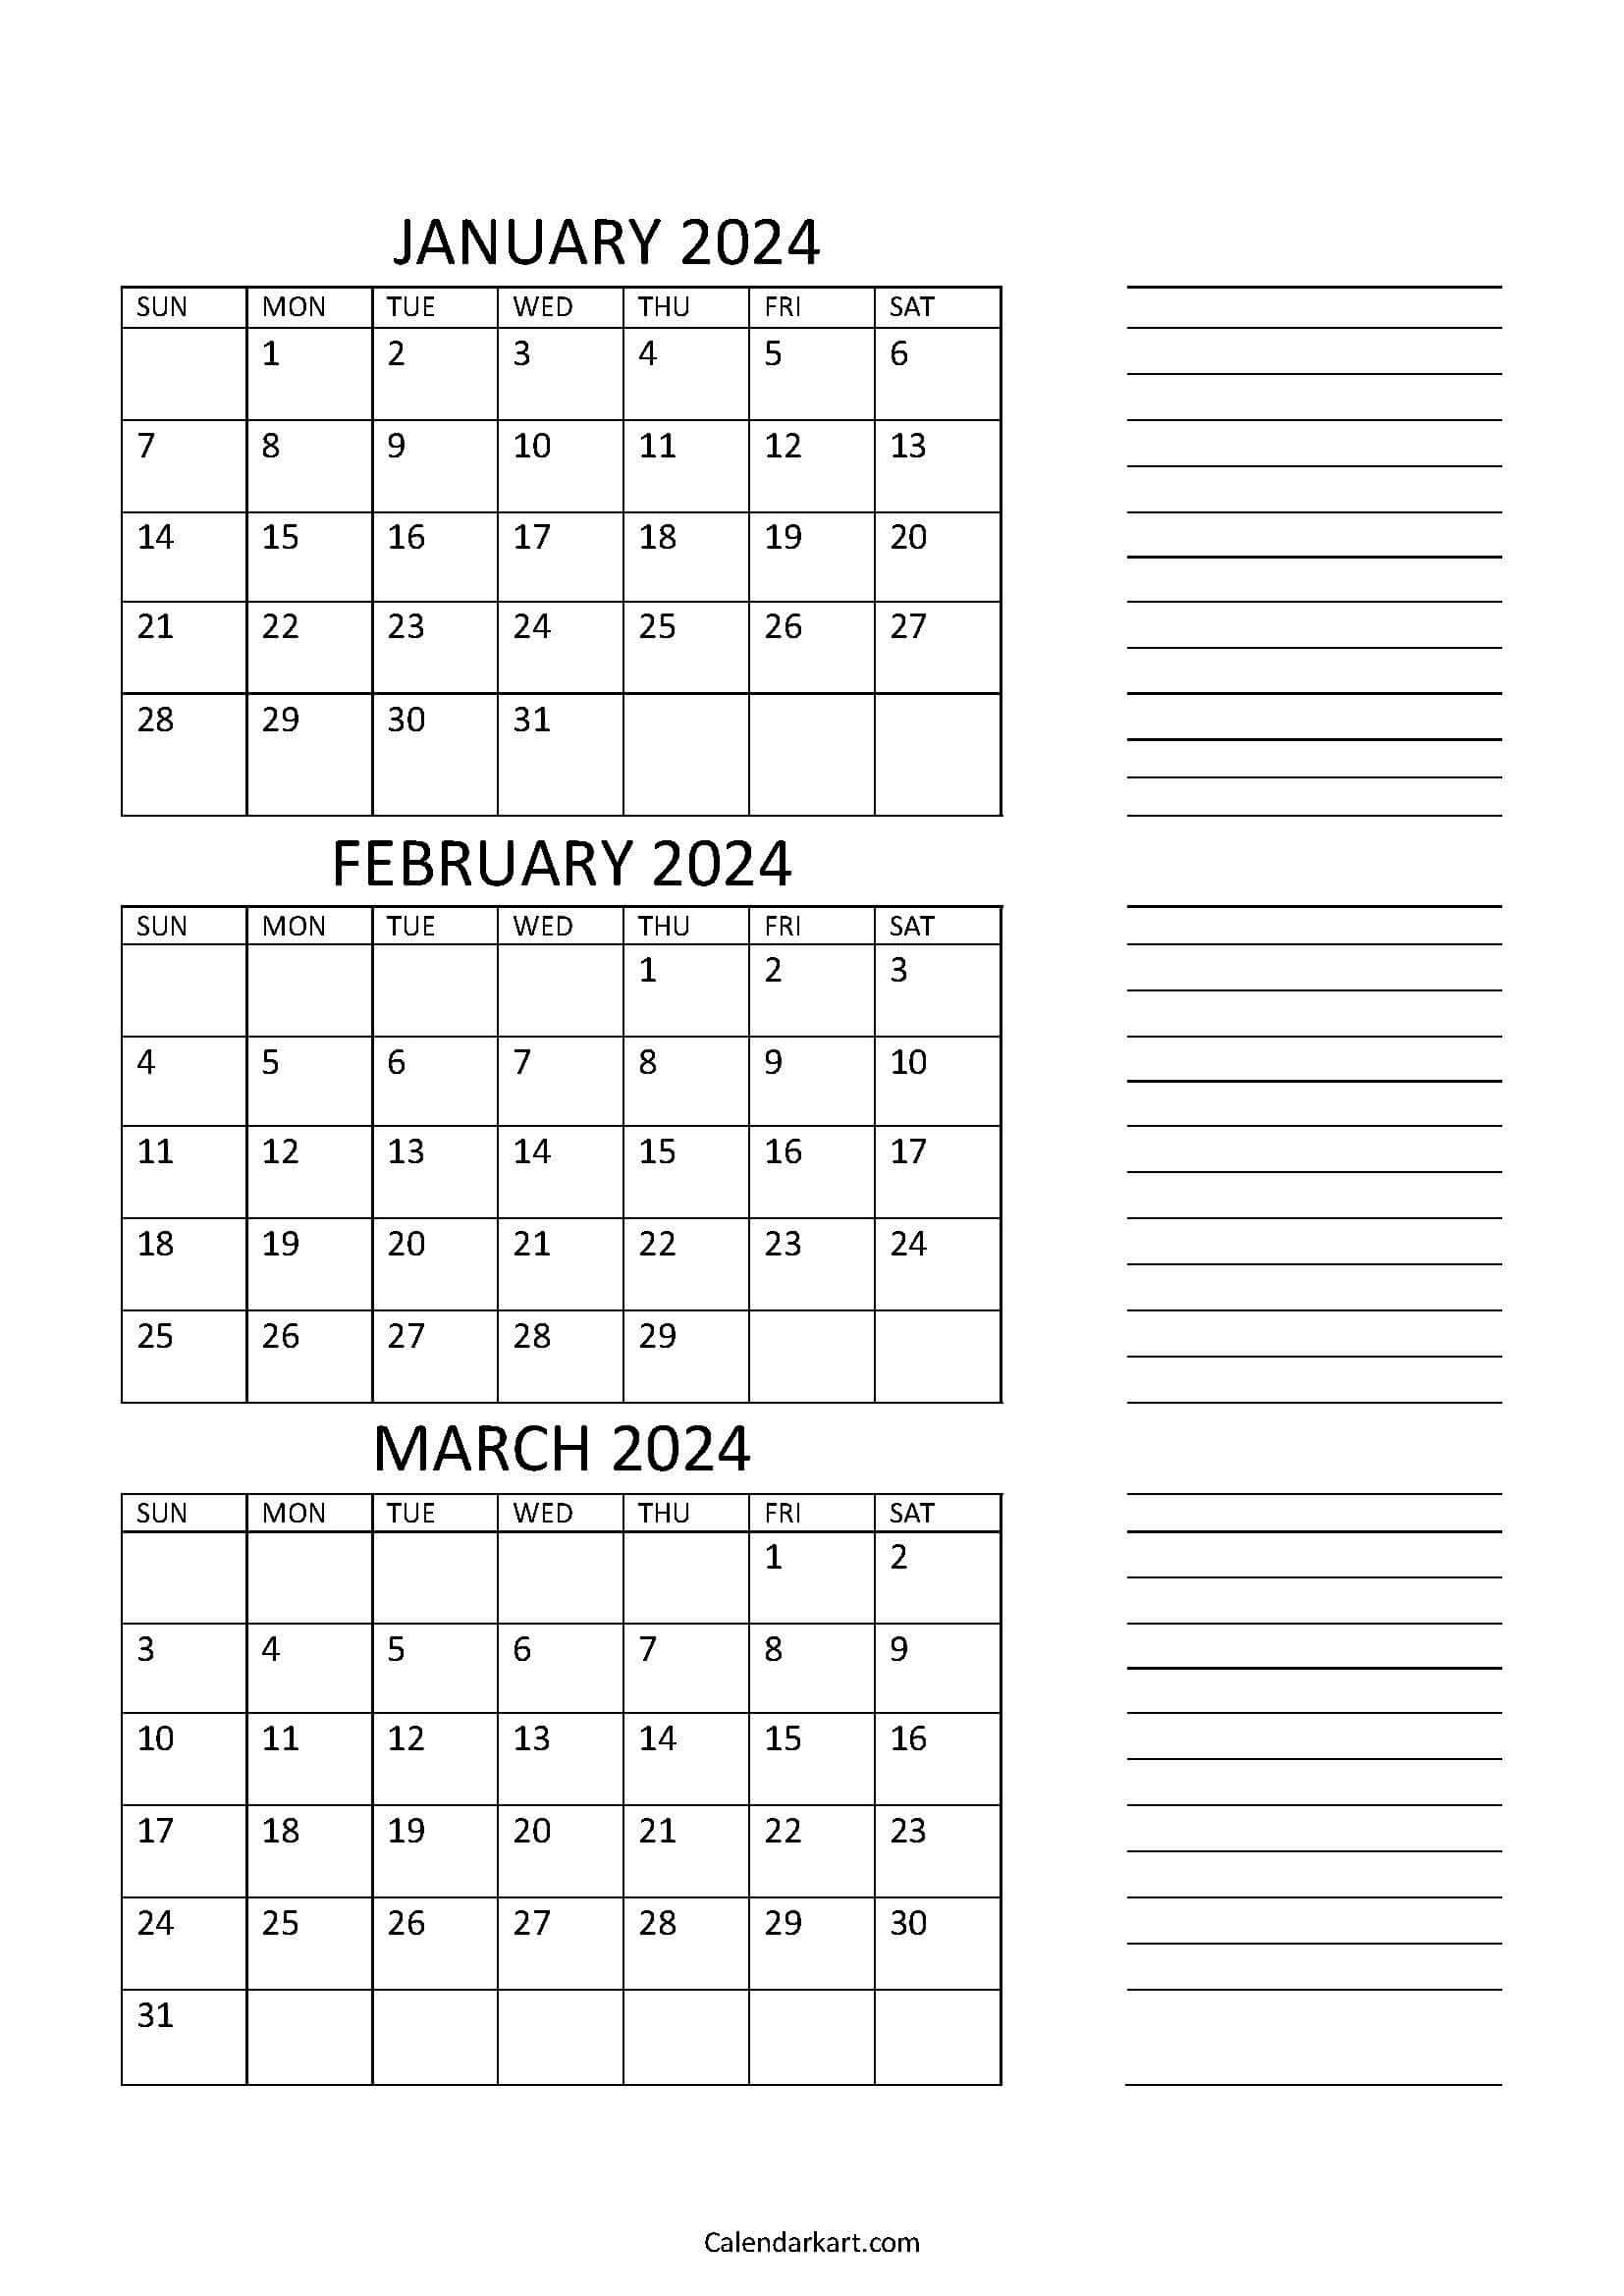 Free Printable January To March 2024 Calendar - Calendarkart | 3 Month Calendar 2024 Printable